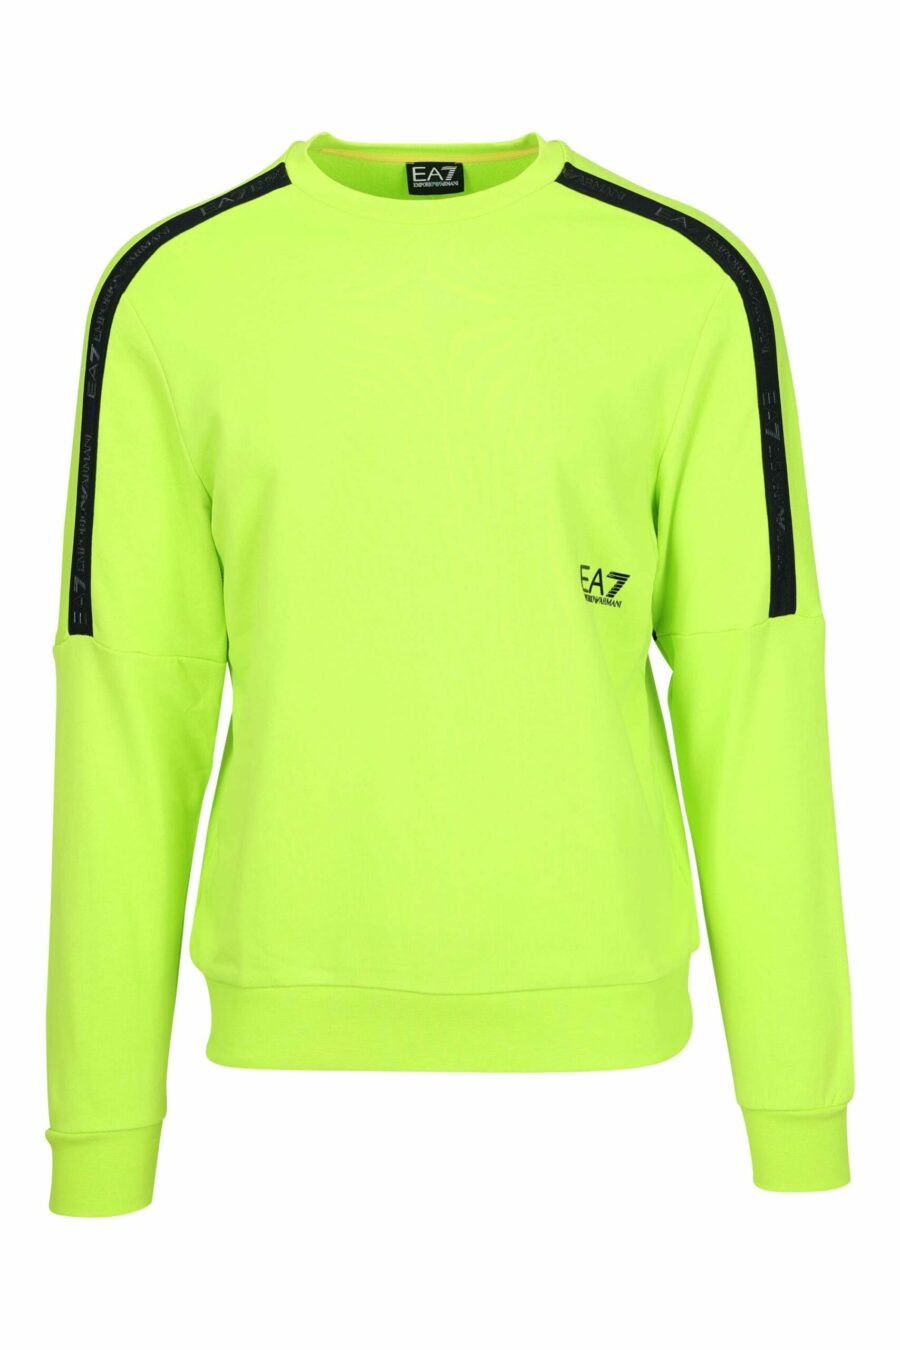 Sweatshirt vert tilleul avec mini-logo "lux identity" sur ruban monochrome - 8057970709947 scaled